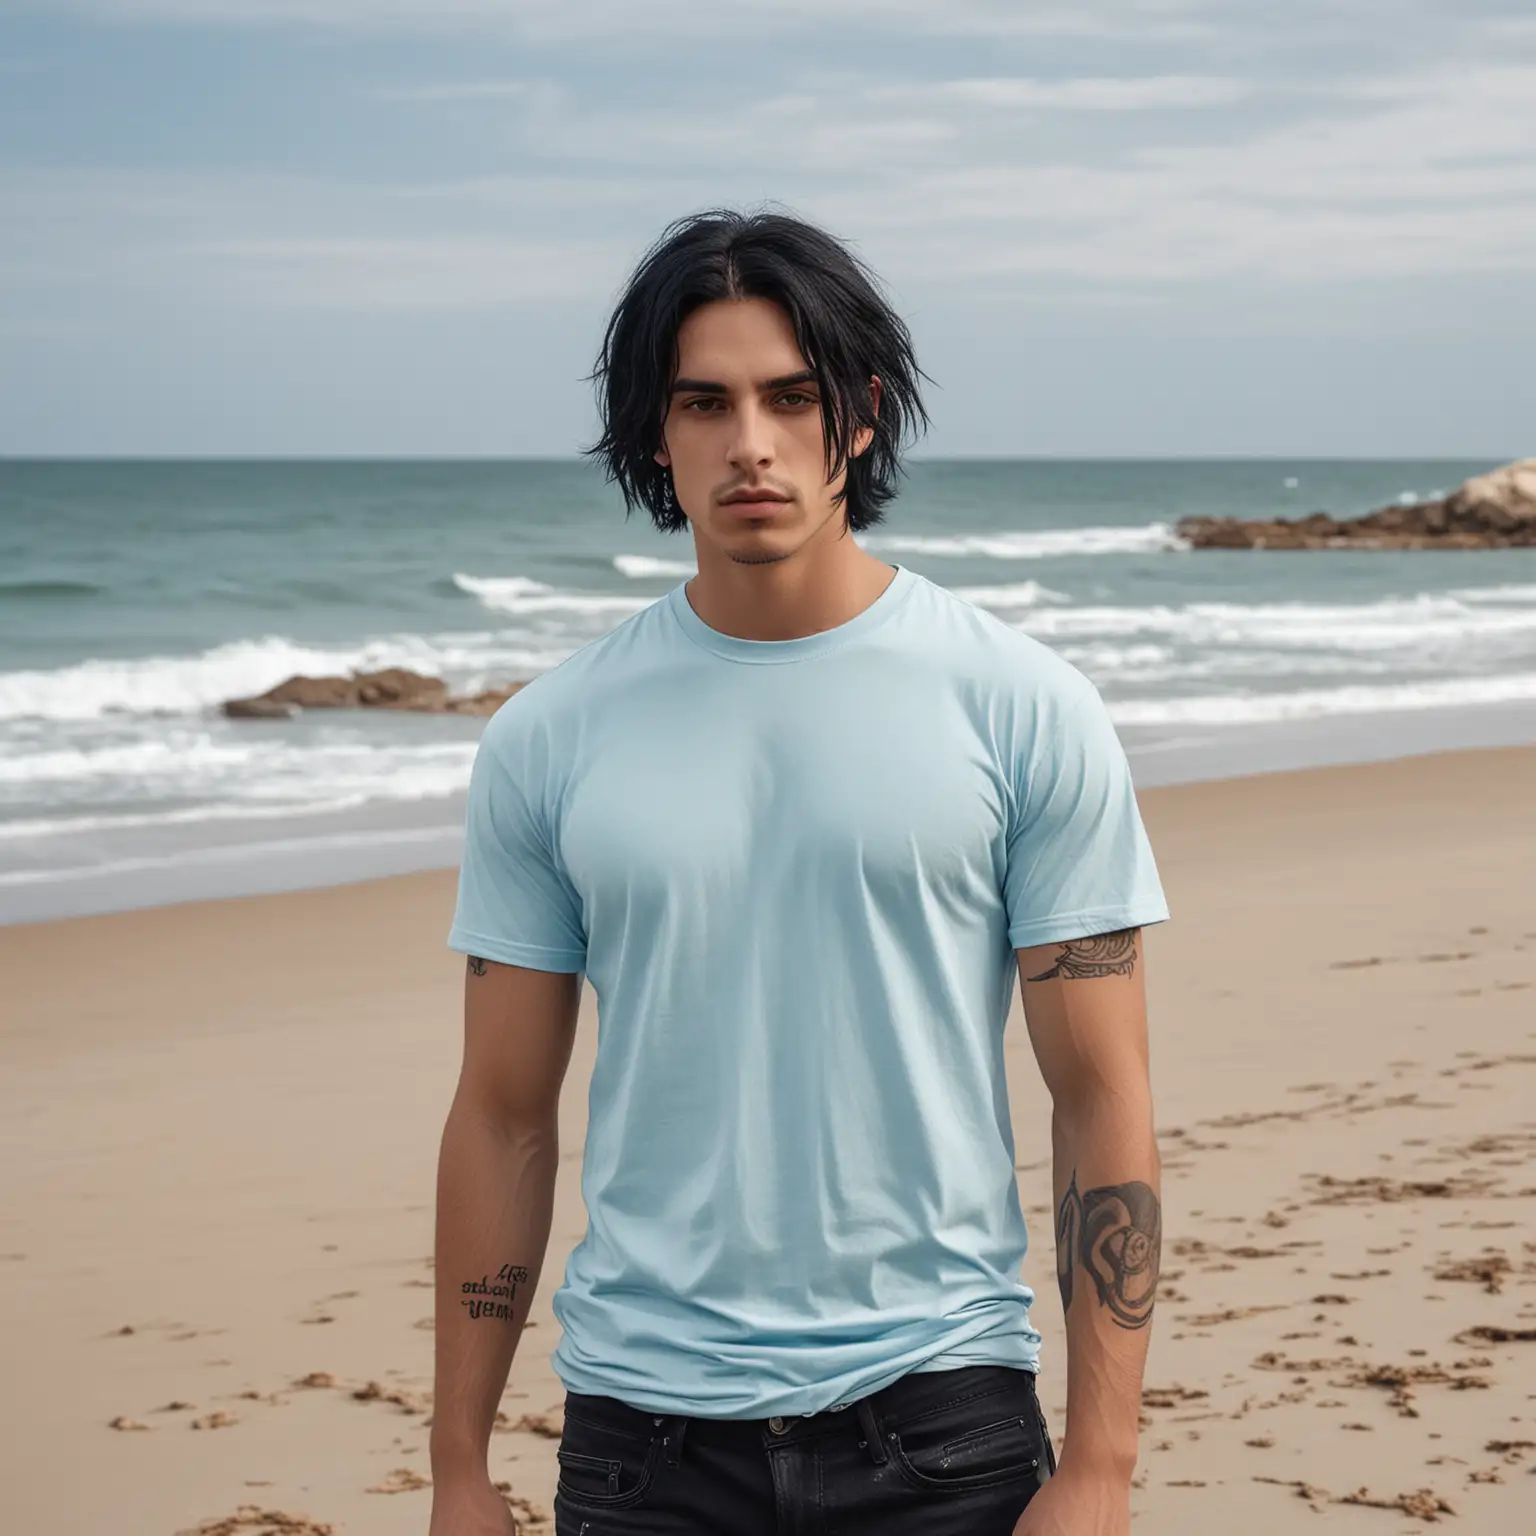 Goth Male Model Wearing Light Blue Tee on Beach